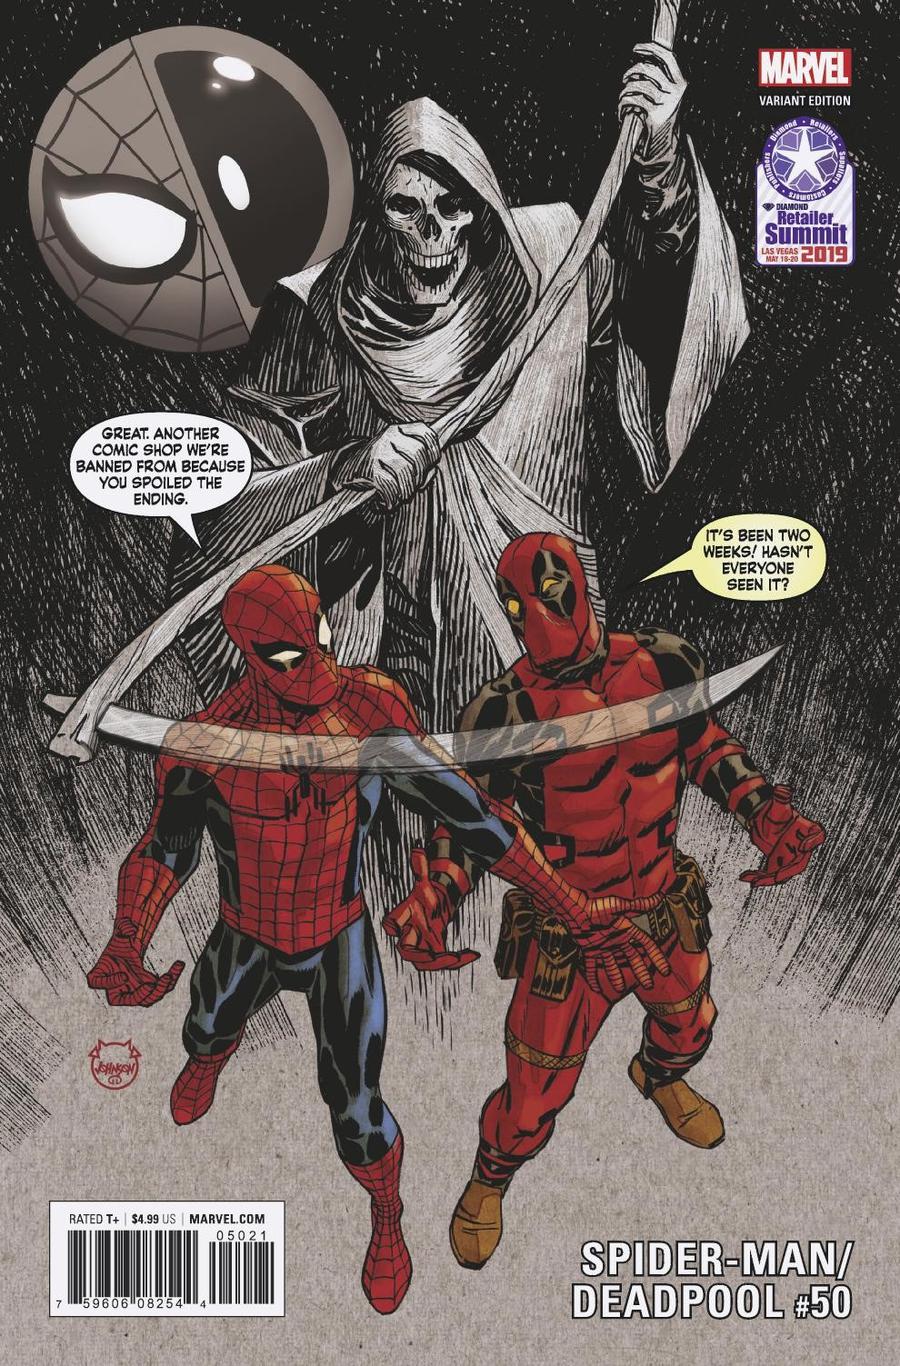 Spider-Man Deadpool #50 Cover B Retailer Summit 2019 Dave Johnson Variant Cover